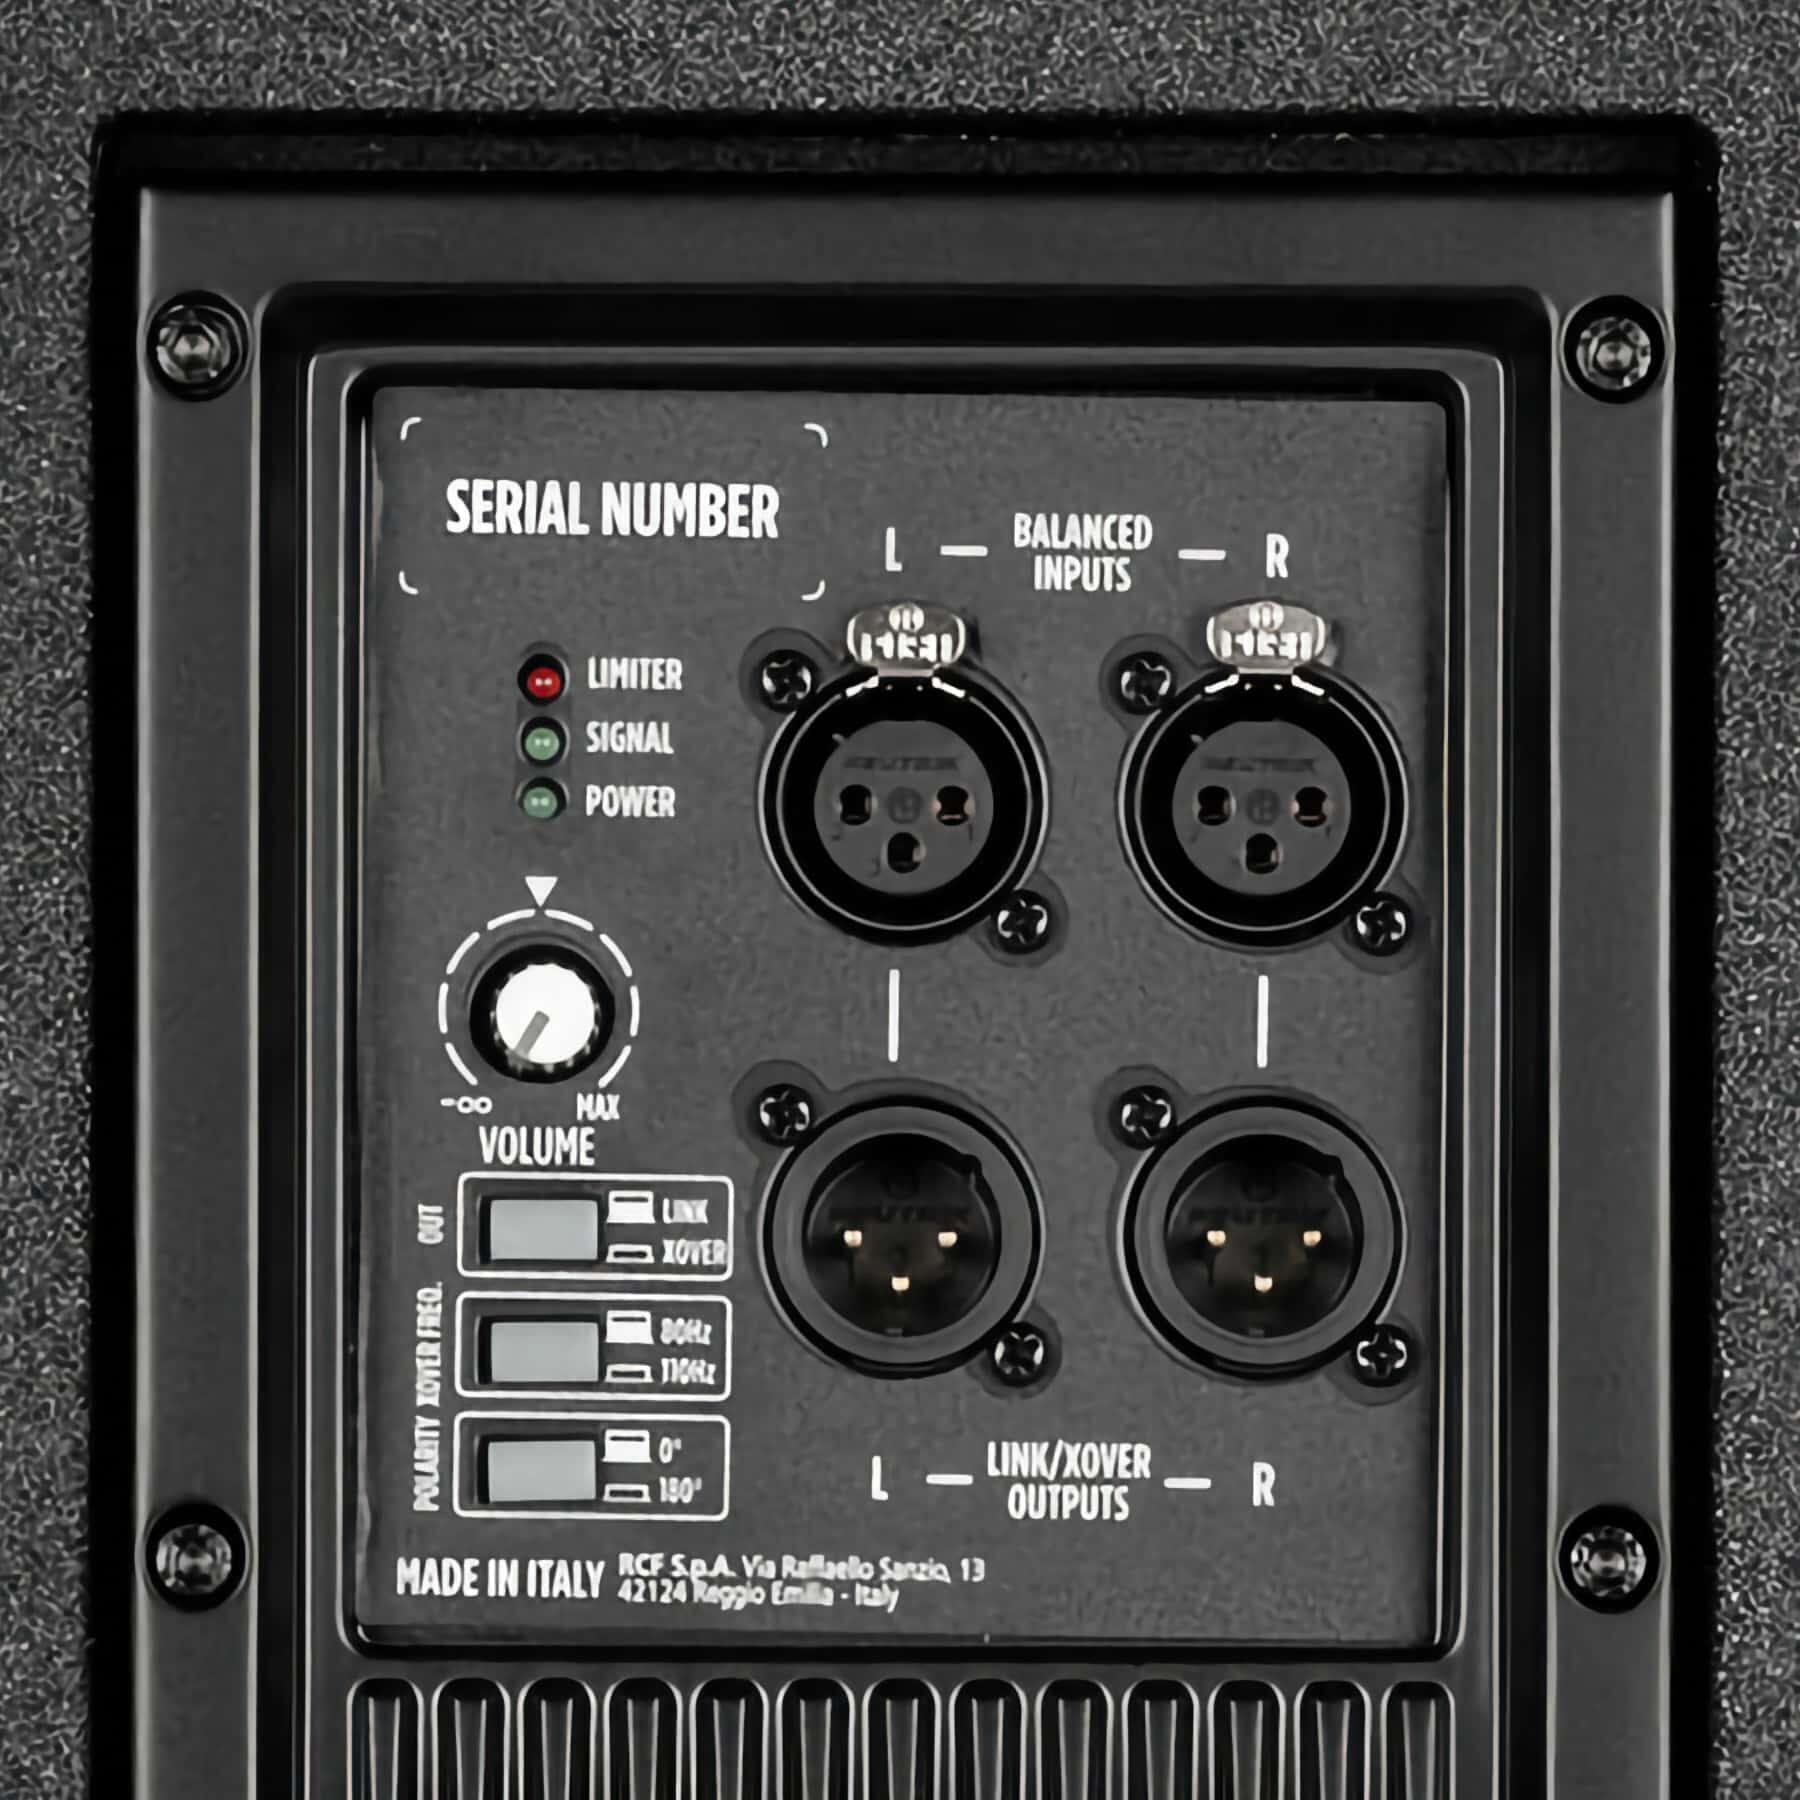 RCF SUB 705-AS MK3 controls